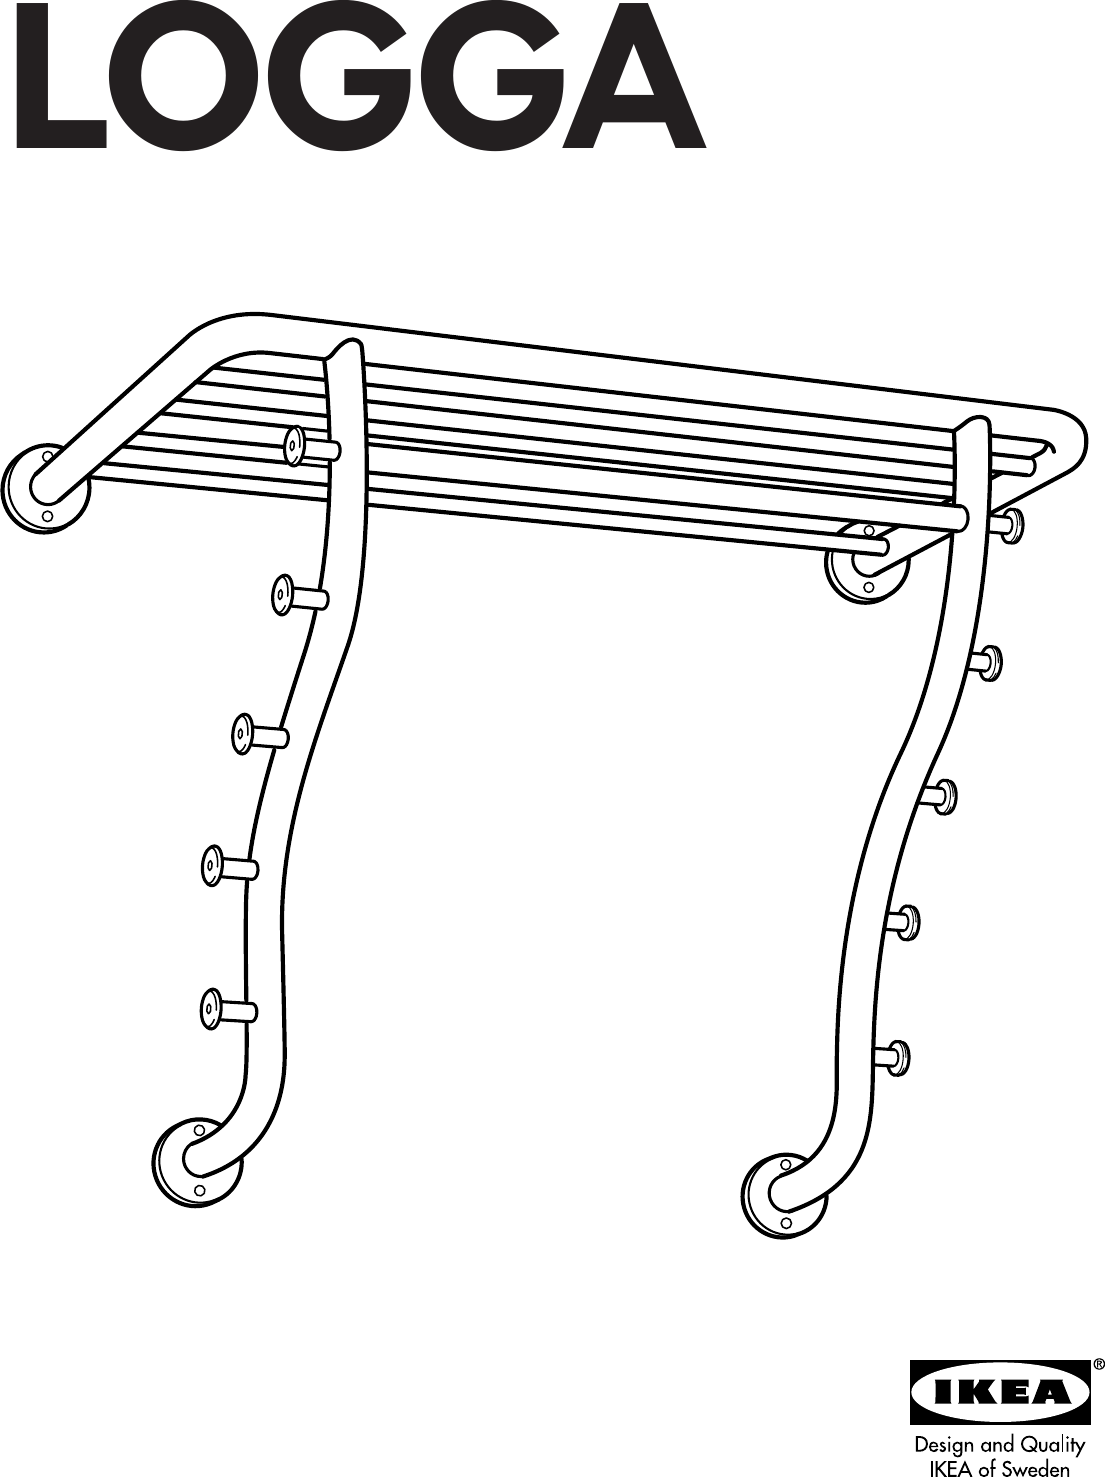 Page 1 of 4 - Ikea Ikea-Logga-Hat-Rack-37-Assembly-Instruction